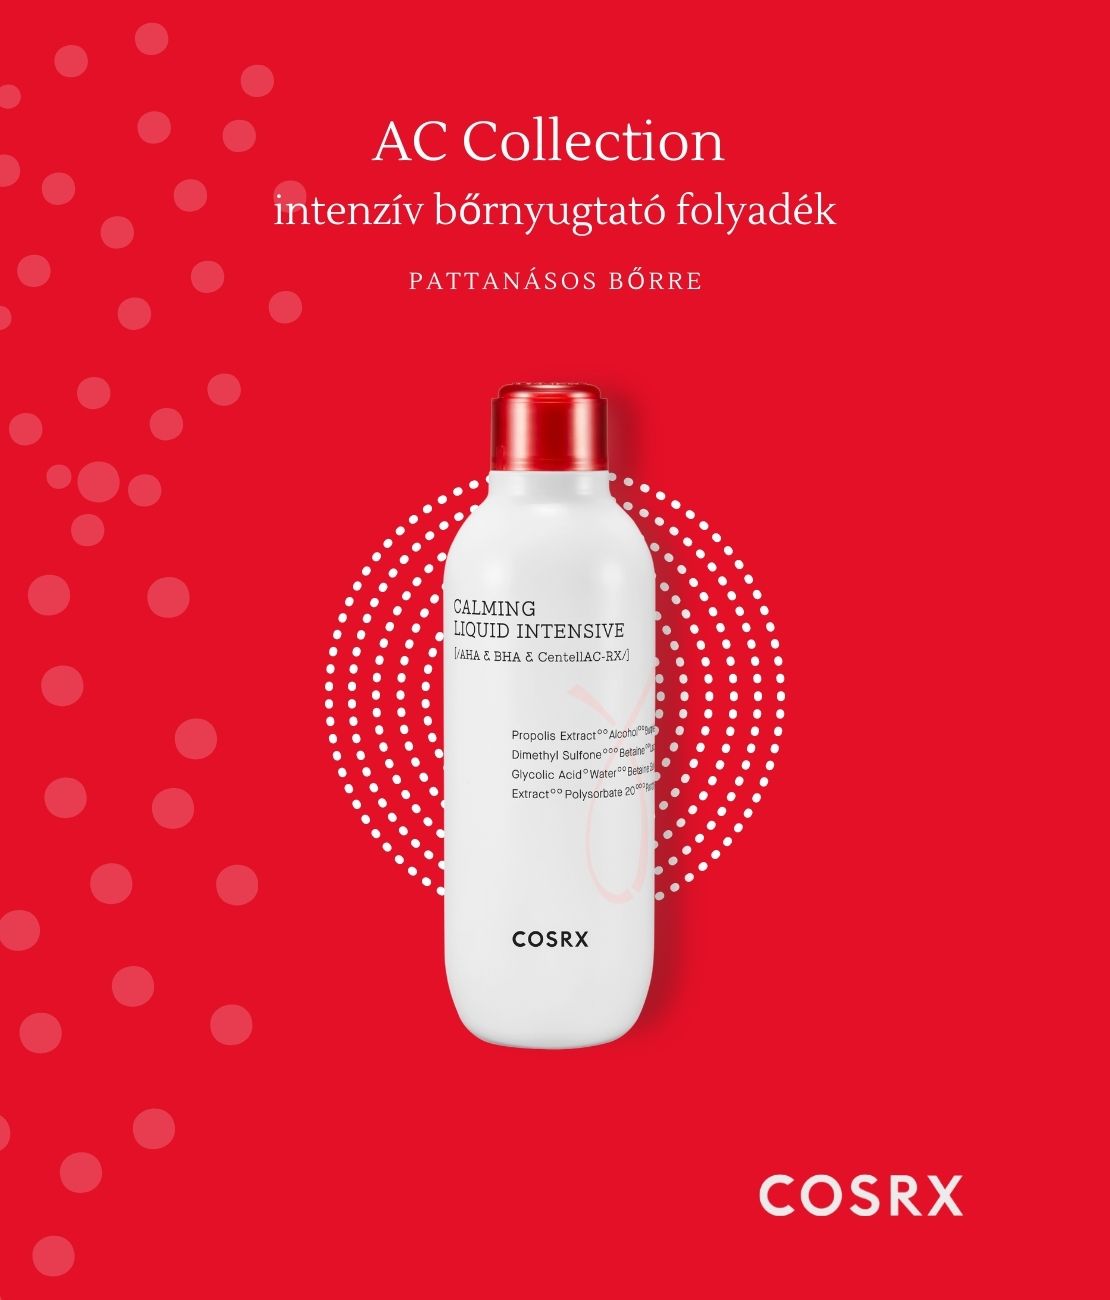 COSRX-AC-Collection-inzenziv-bornyugtato-folyadek-leiras